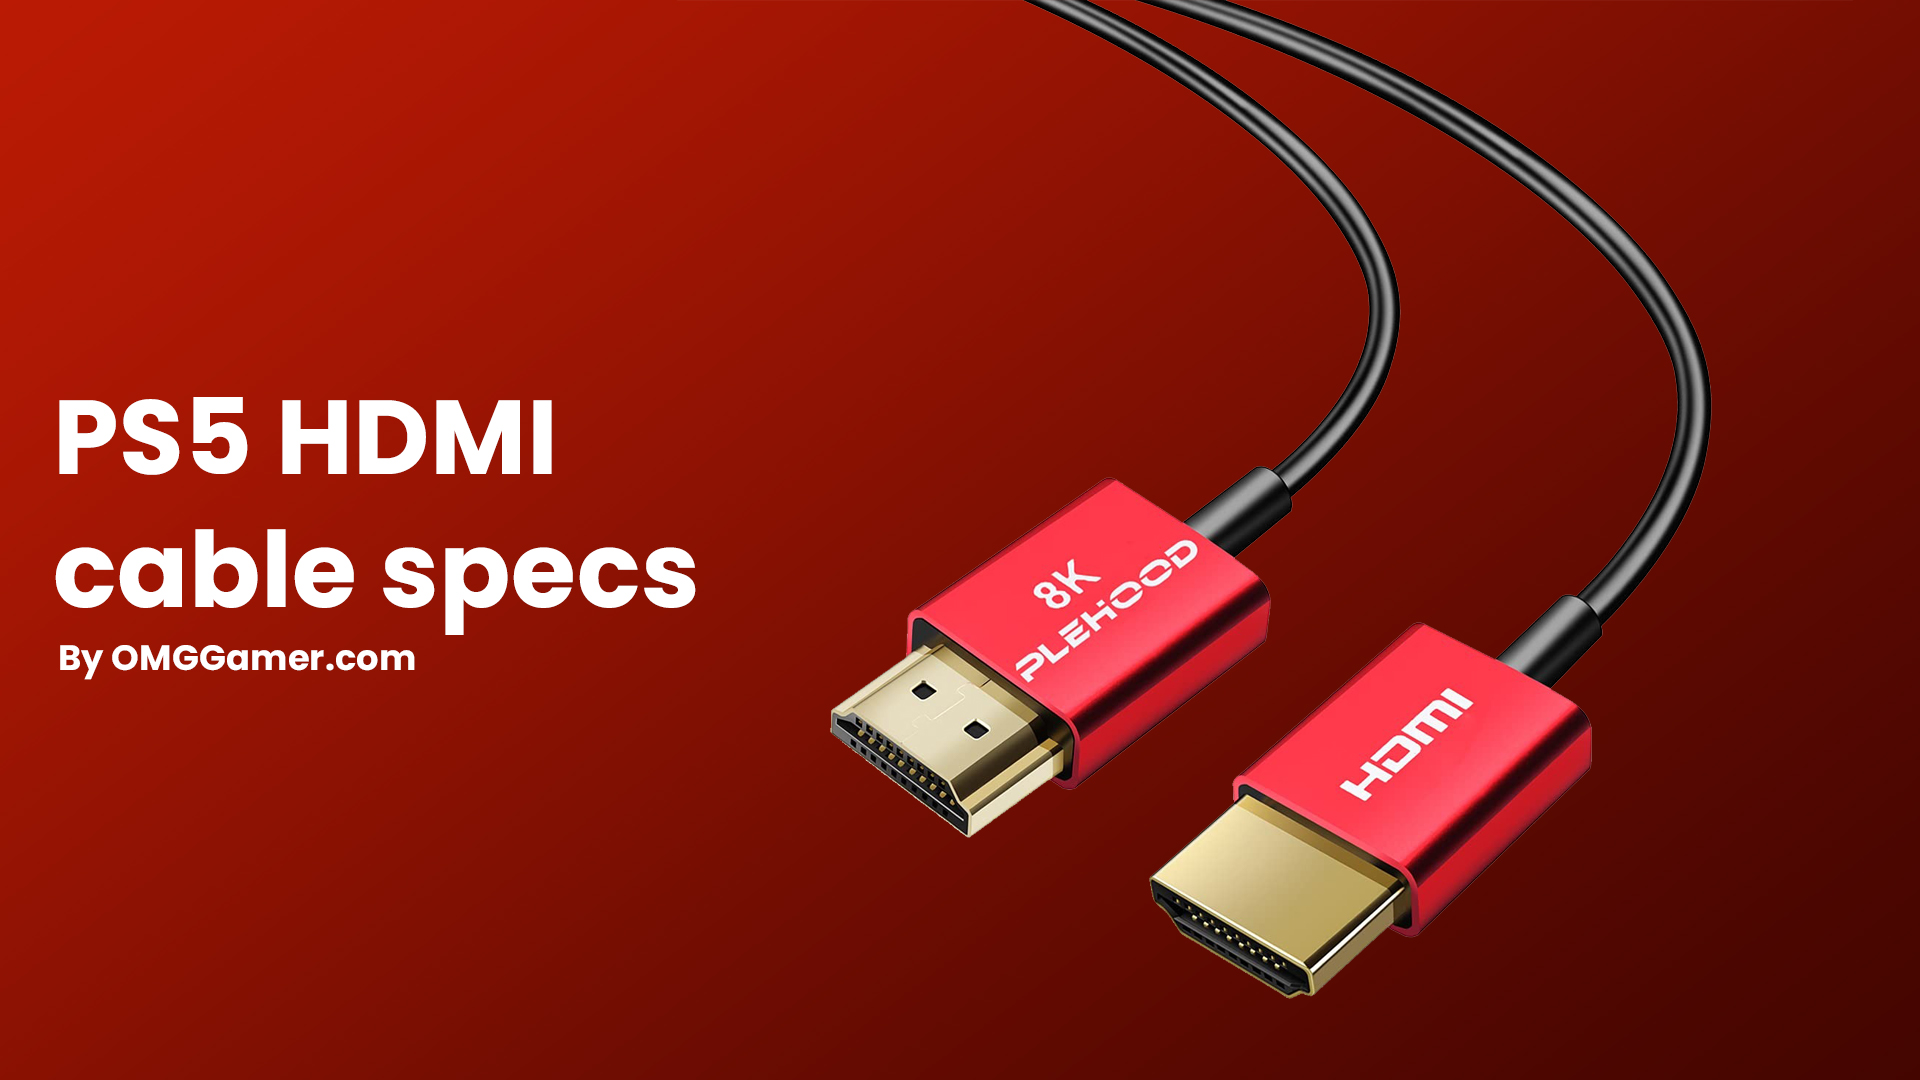 PS5 HDMI cable specs